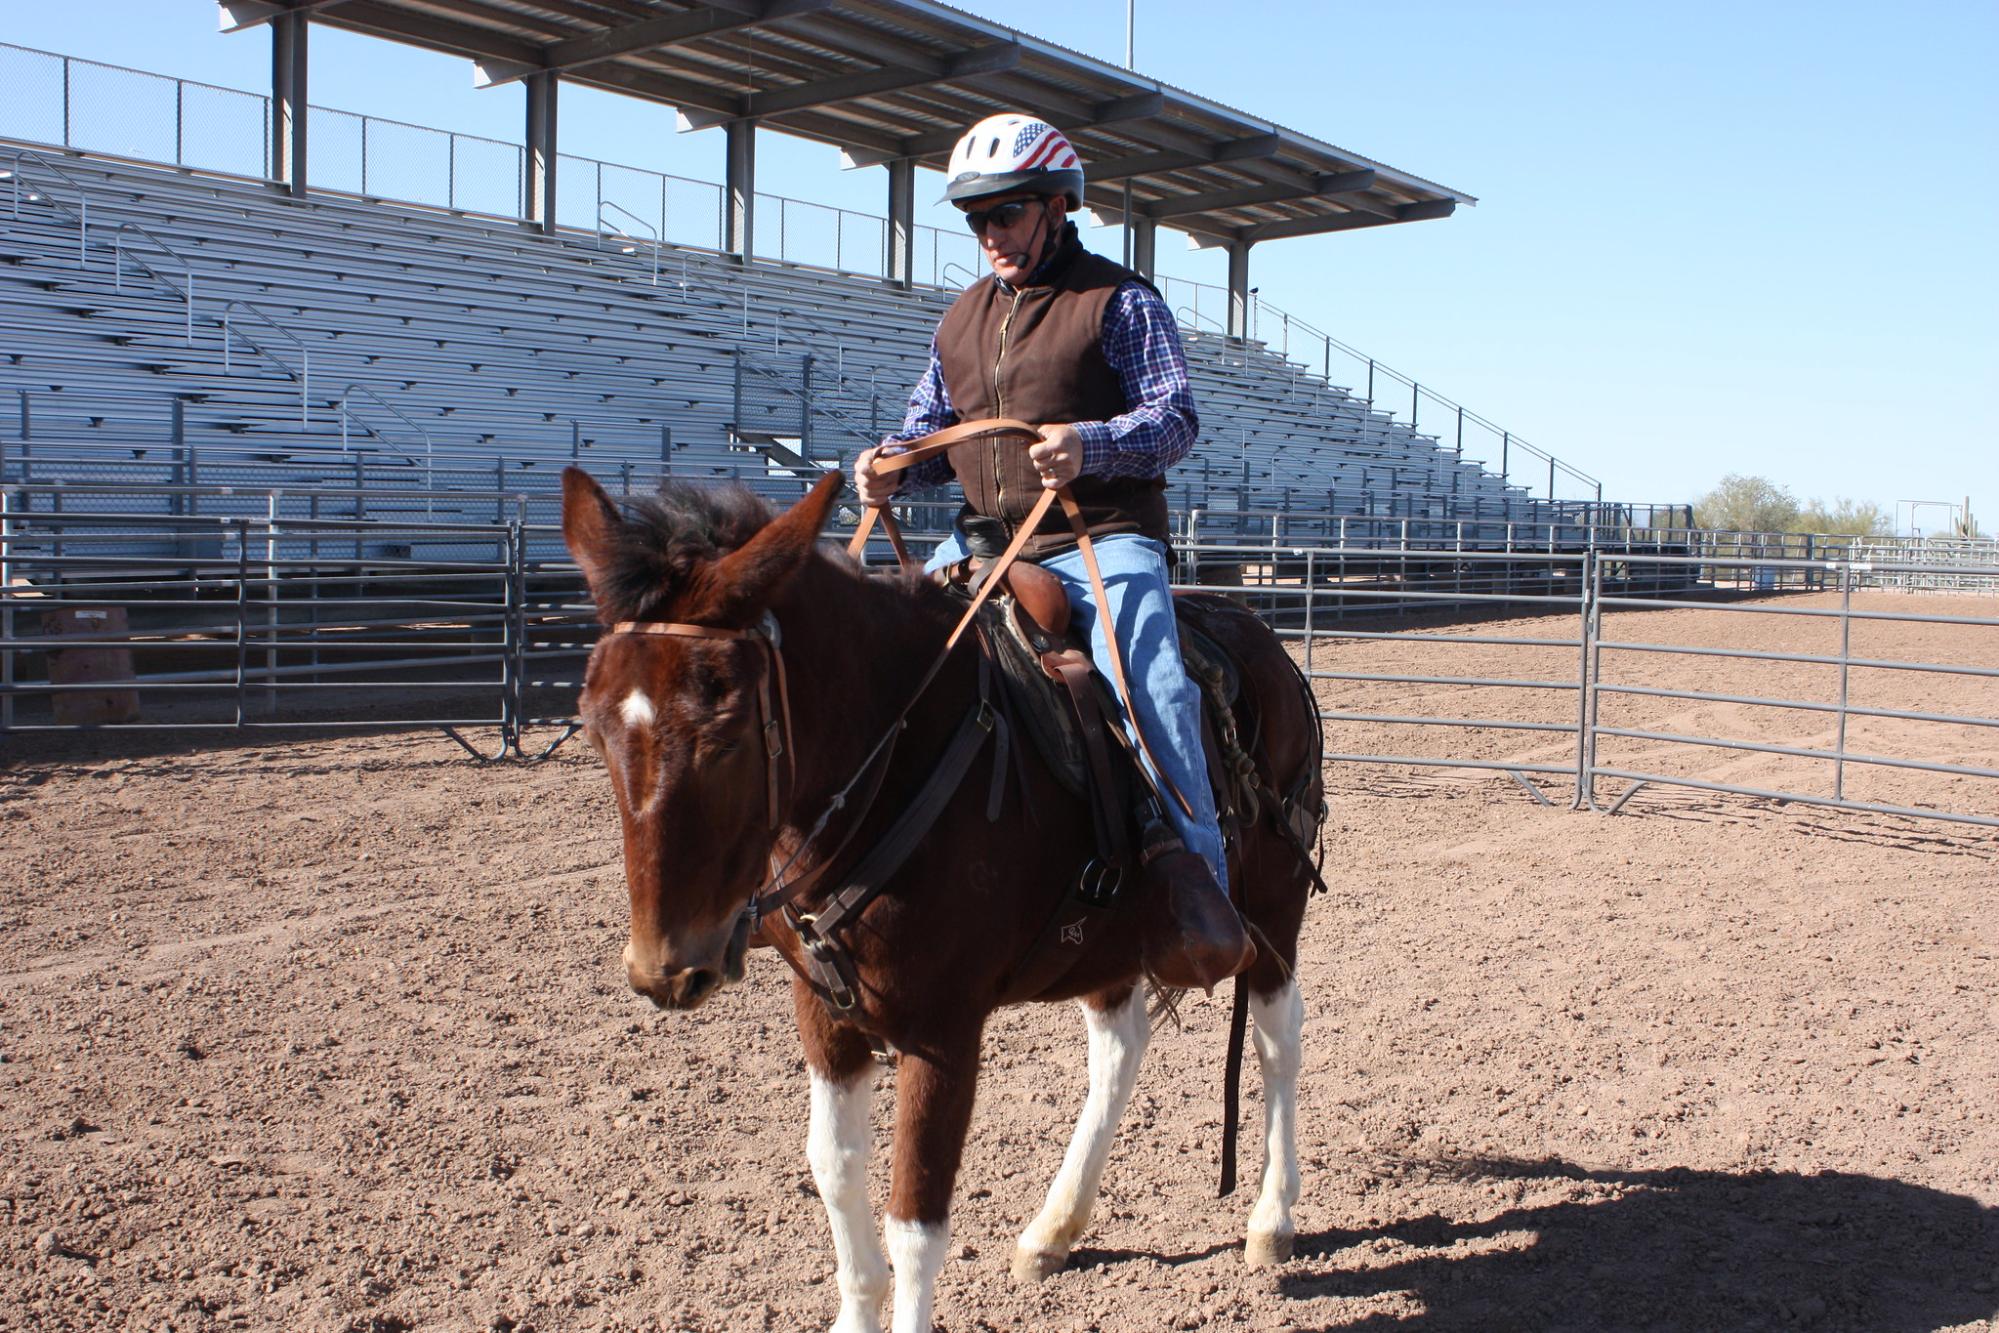 Steve Edwards mounting a mule